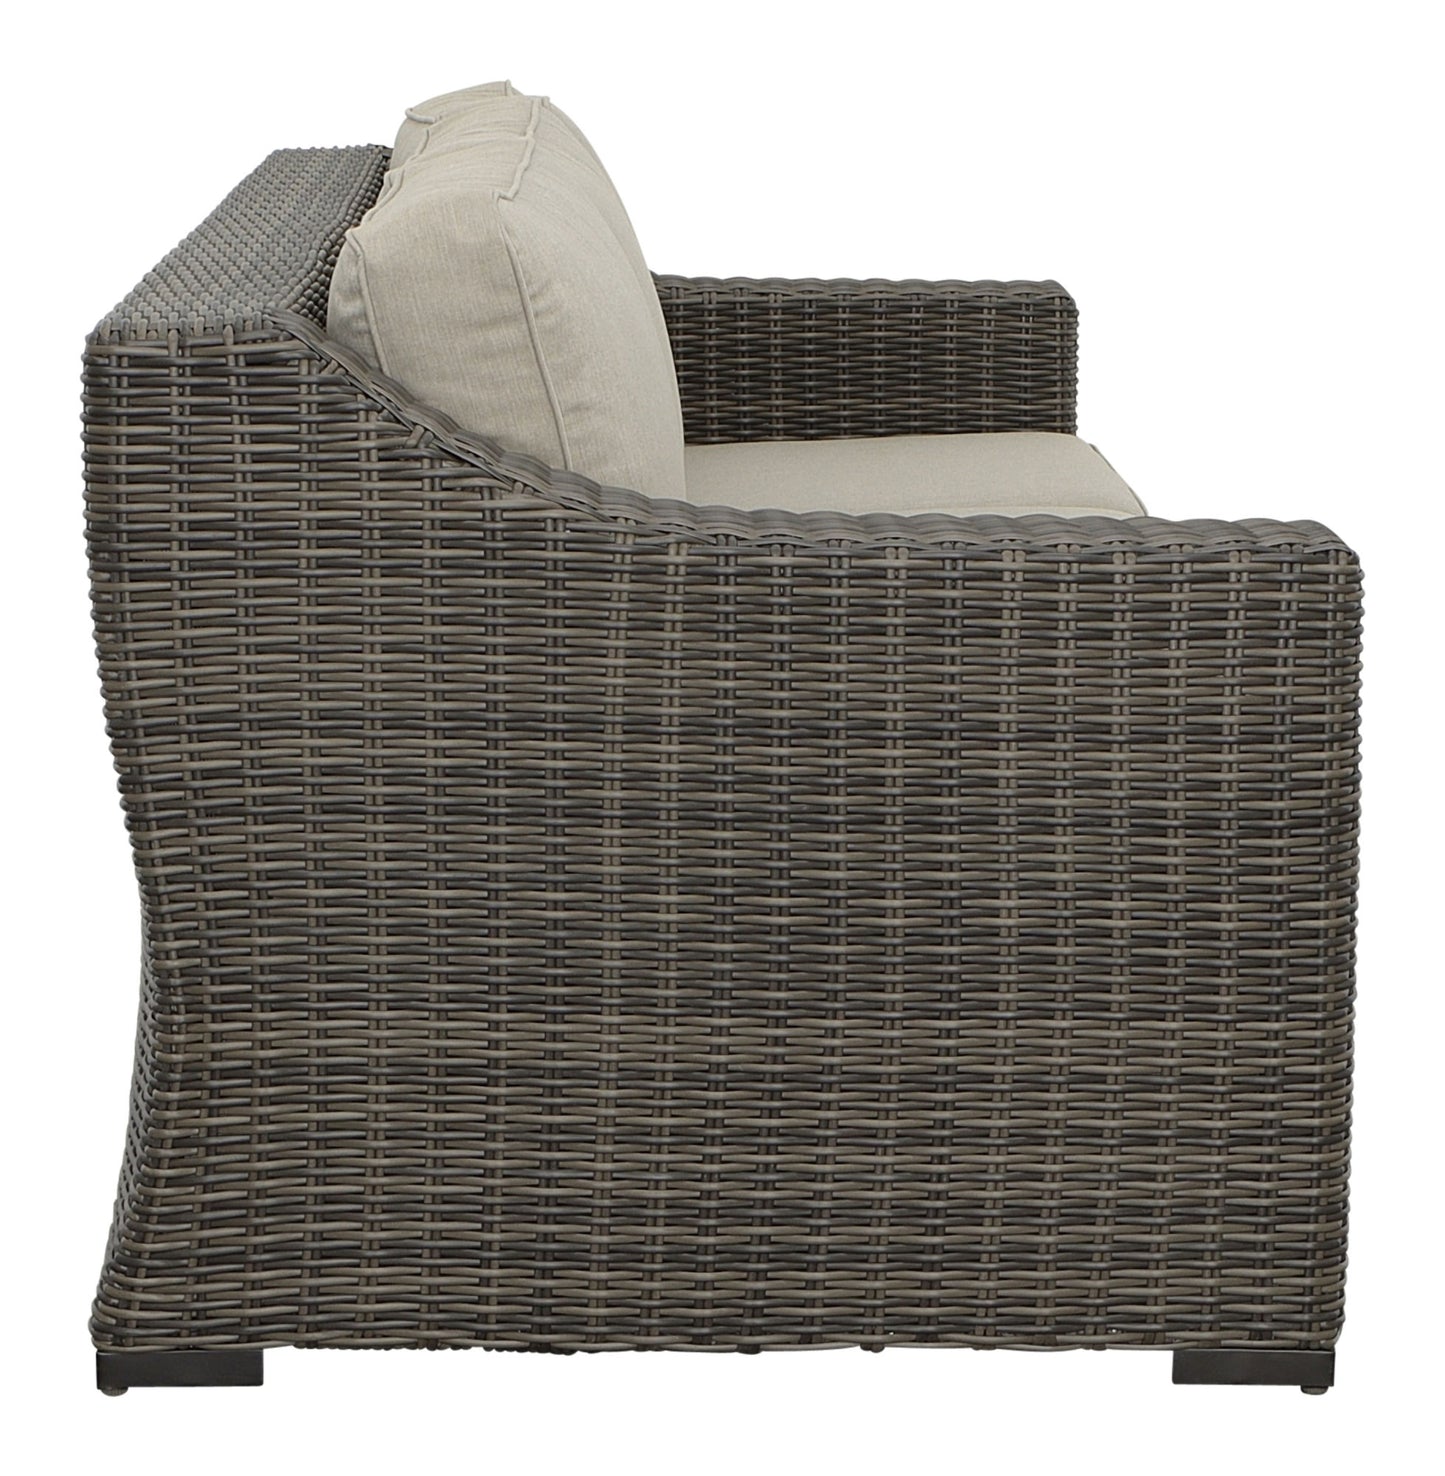 Patio Sofa Full-Round Resin Wicker, Plush Seating, Weather-Resistant